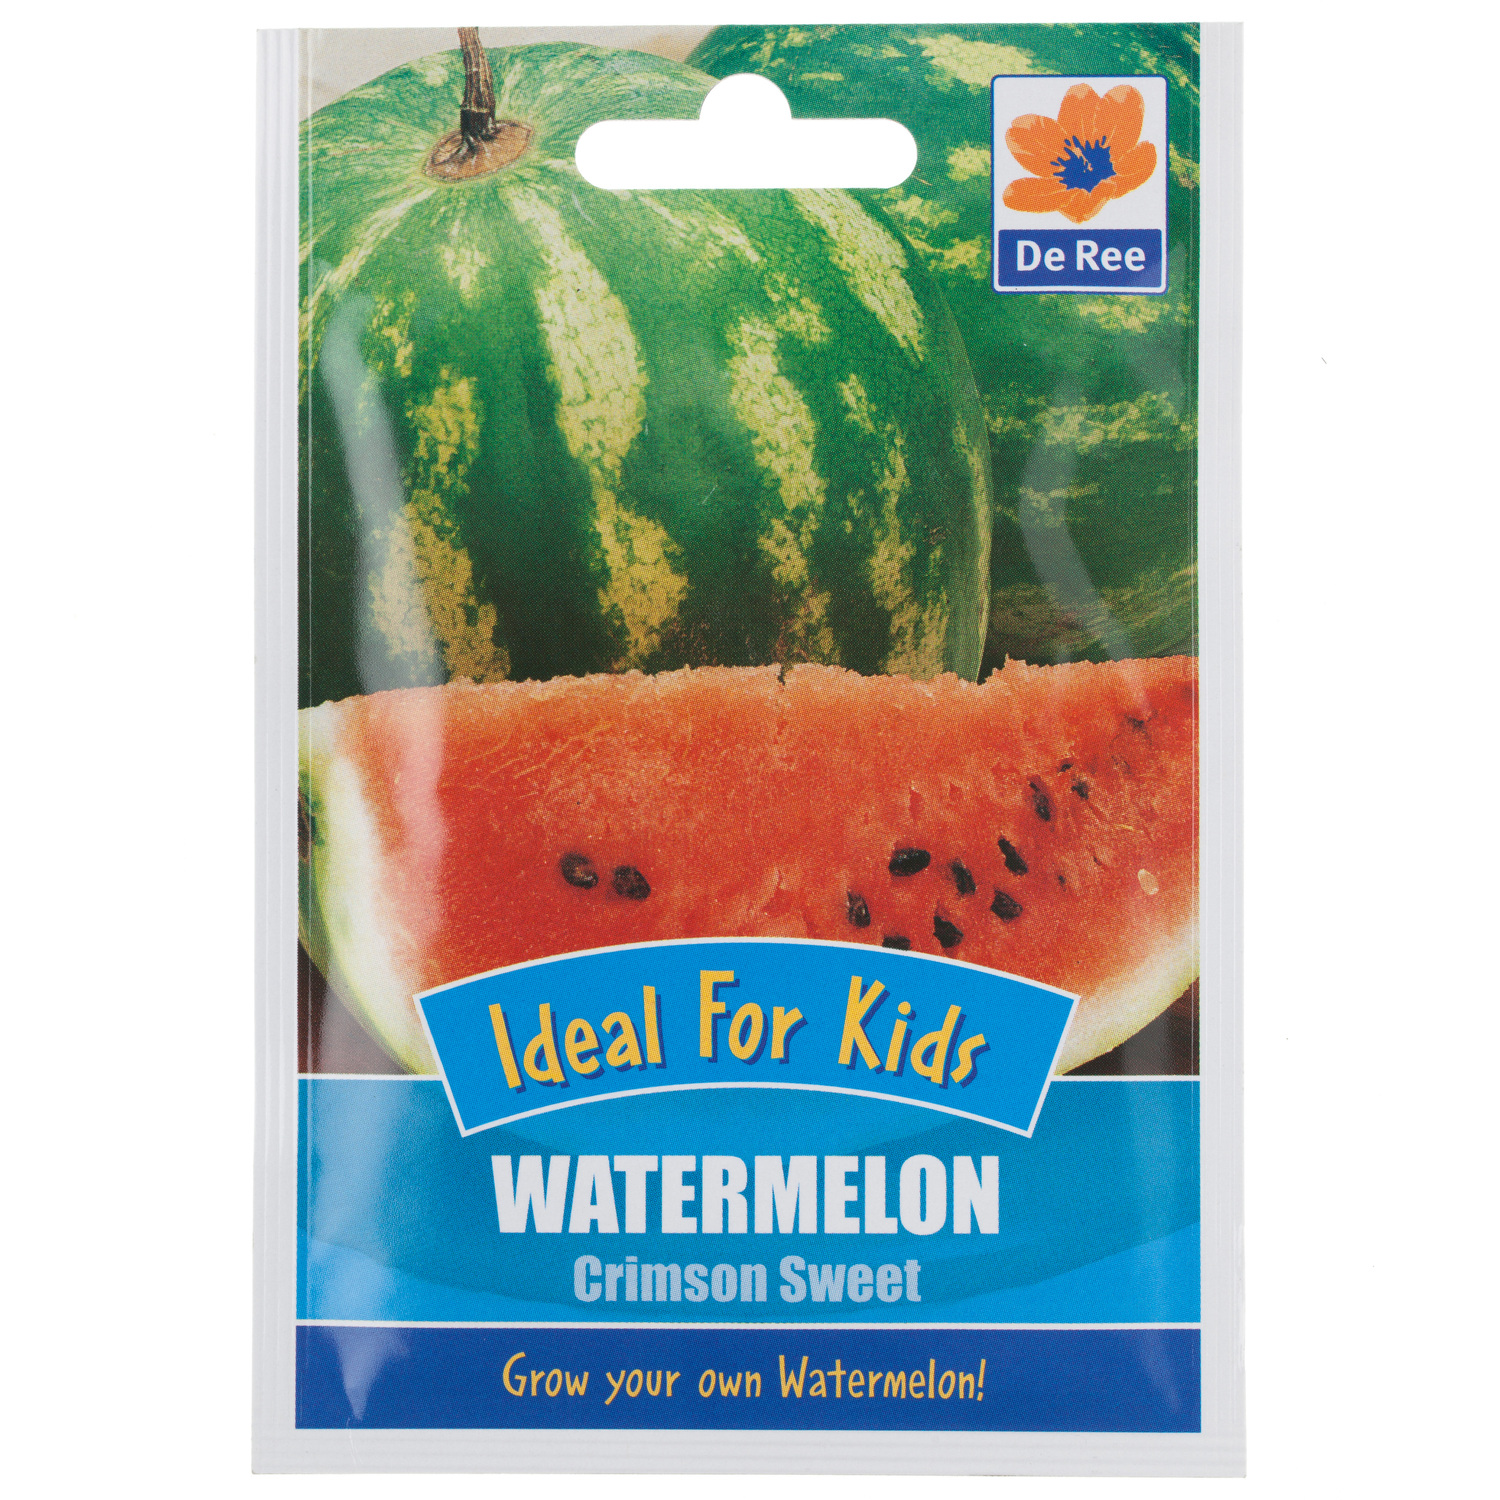 De Ree Water Melon Crimson Sweet Seed Packet Image